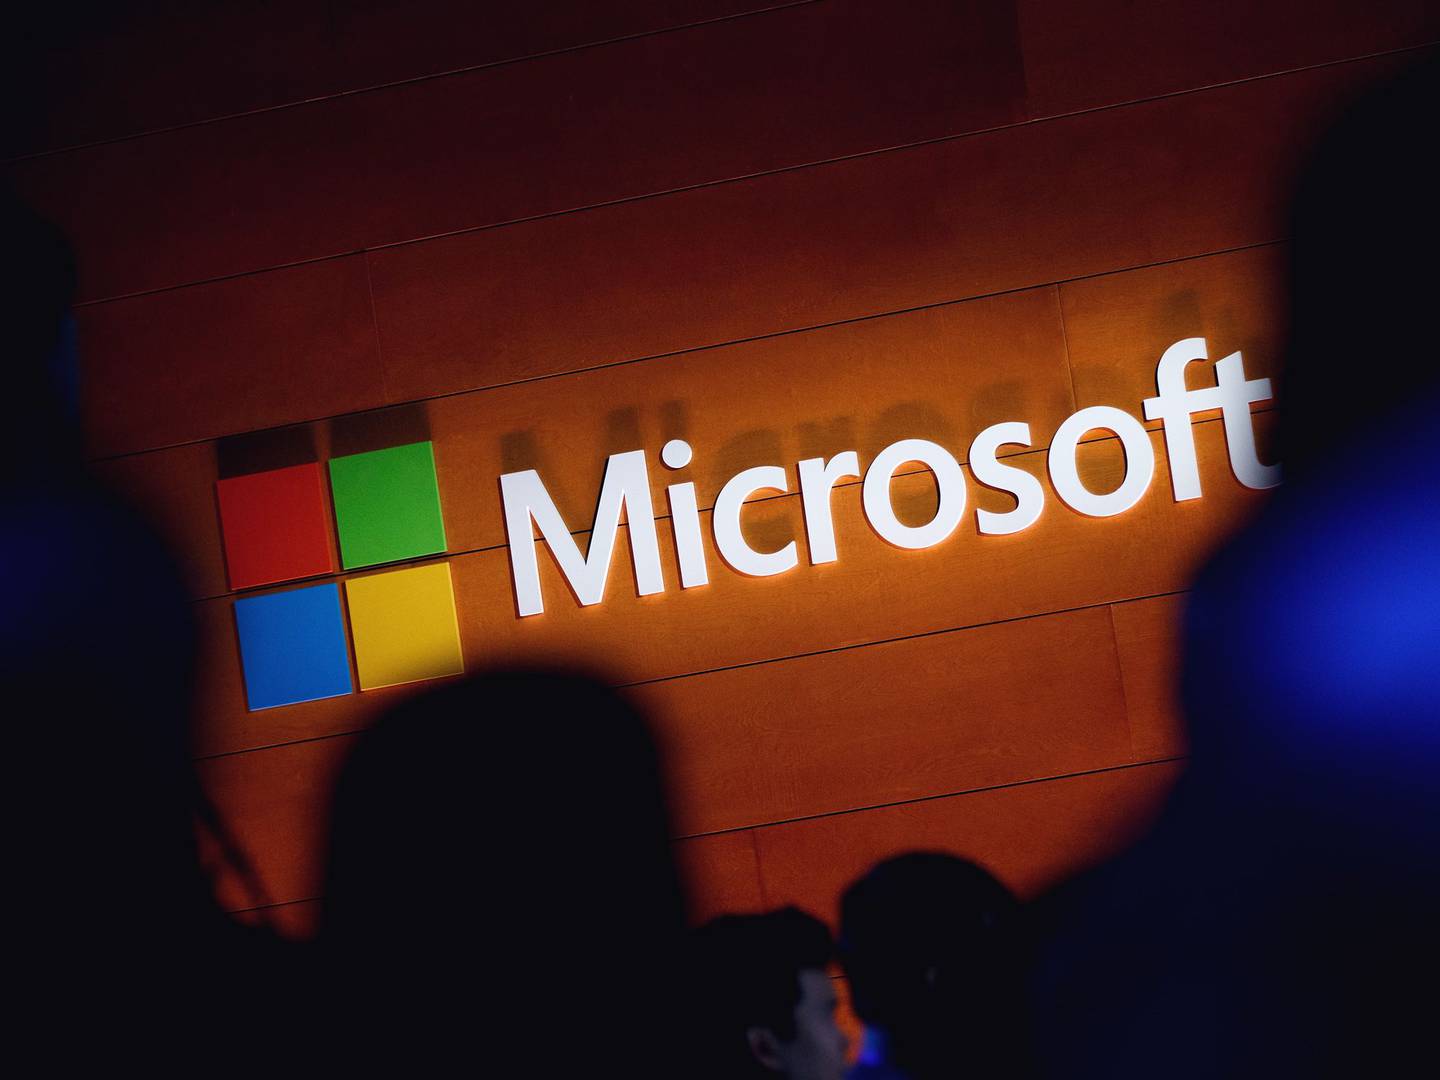 El logotipo de Microsoft se ilumina en una pared durante un evento de Microsoft. Fotógrafo: Drew Angerer/Getty Images North Americadfd